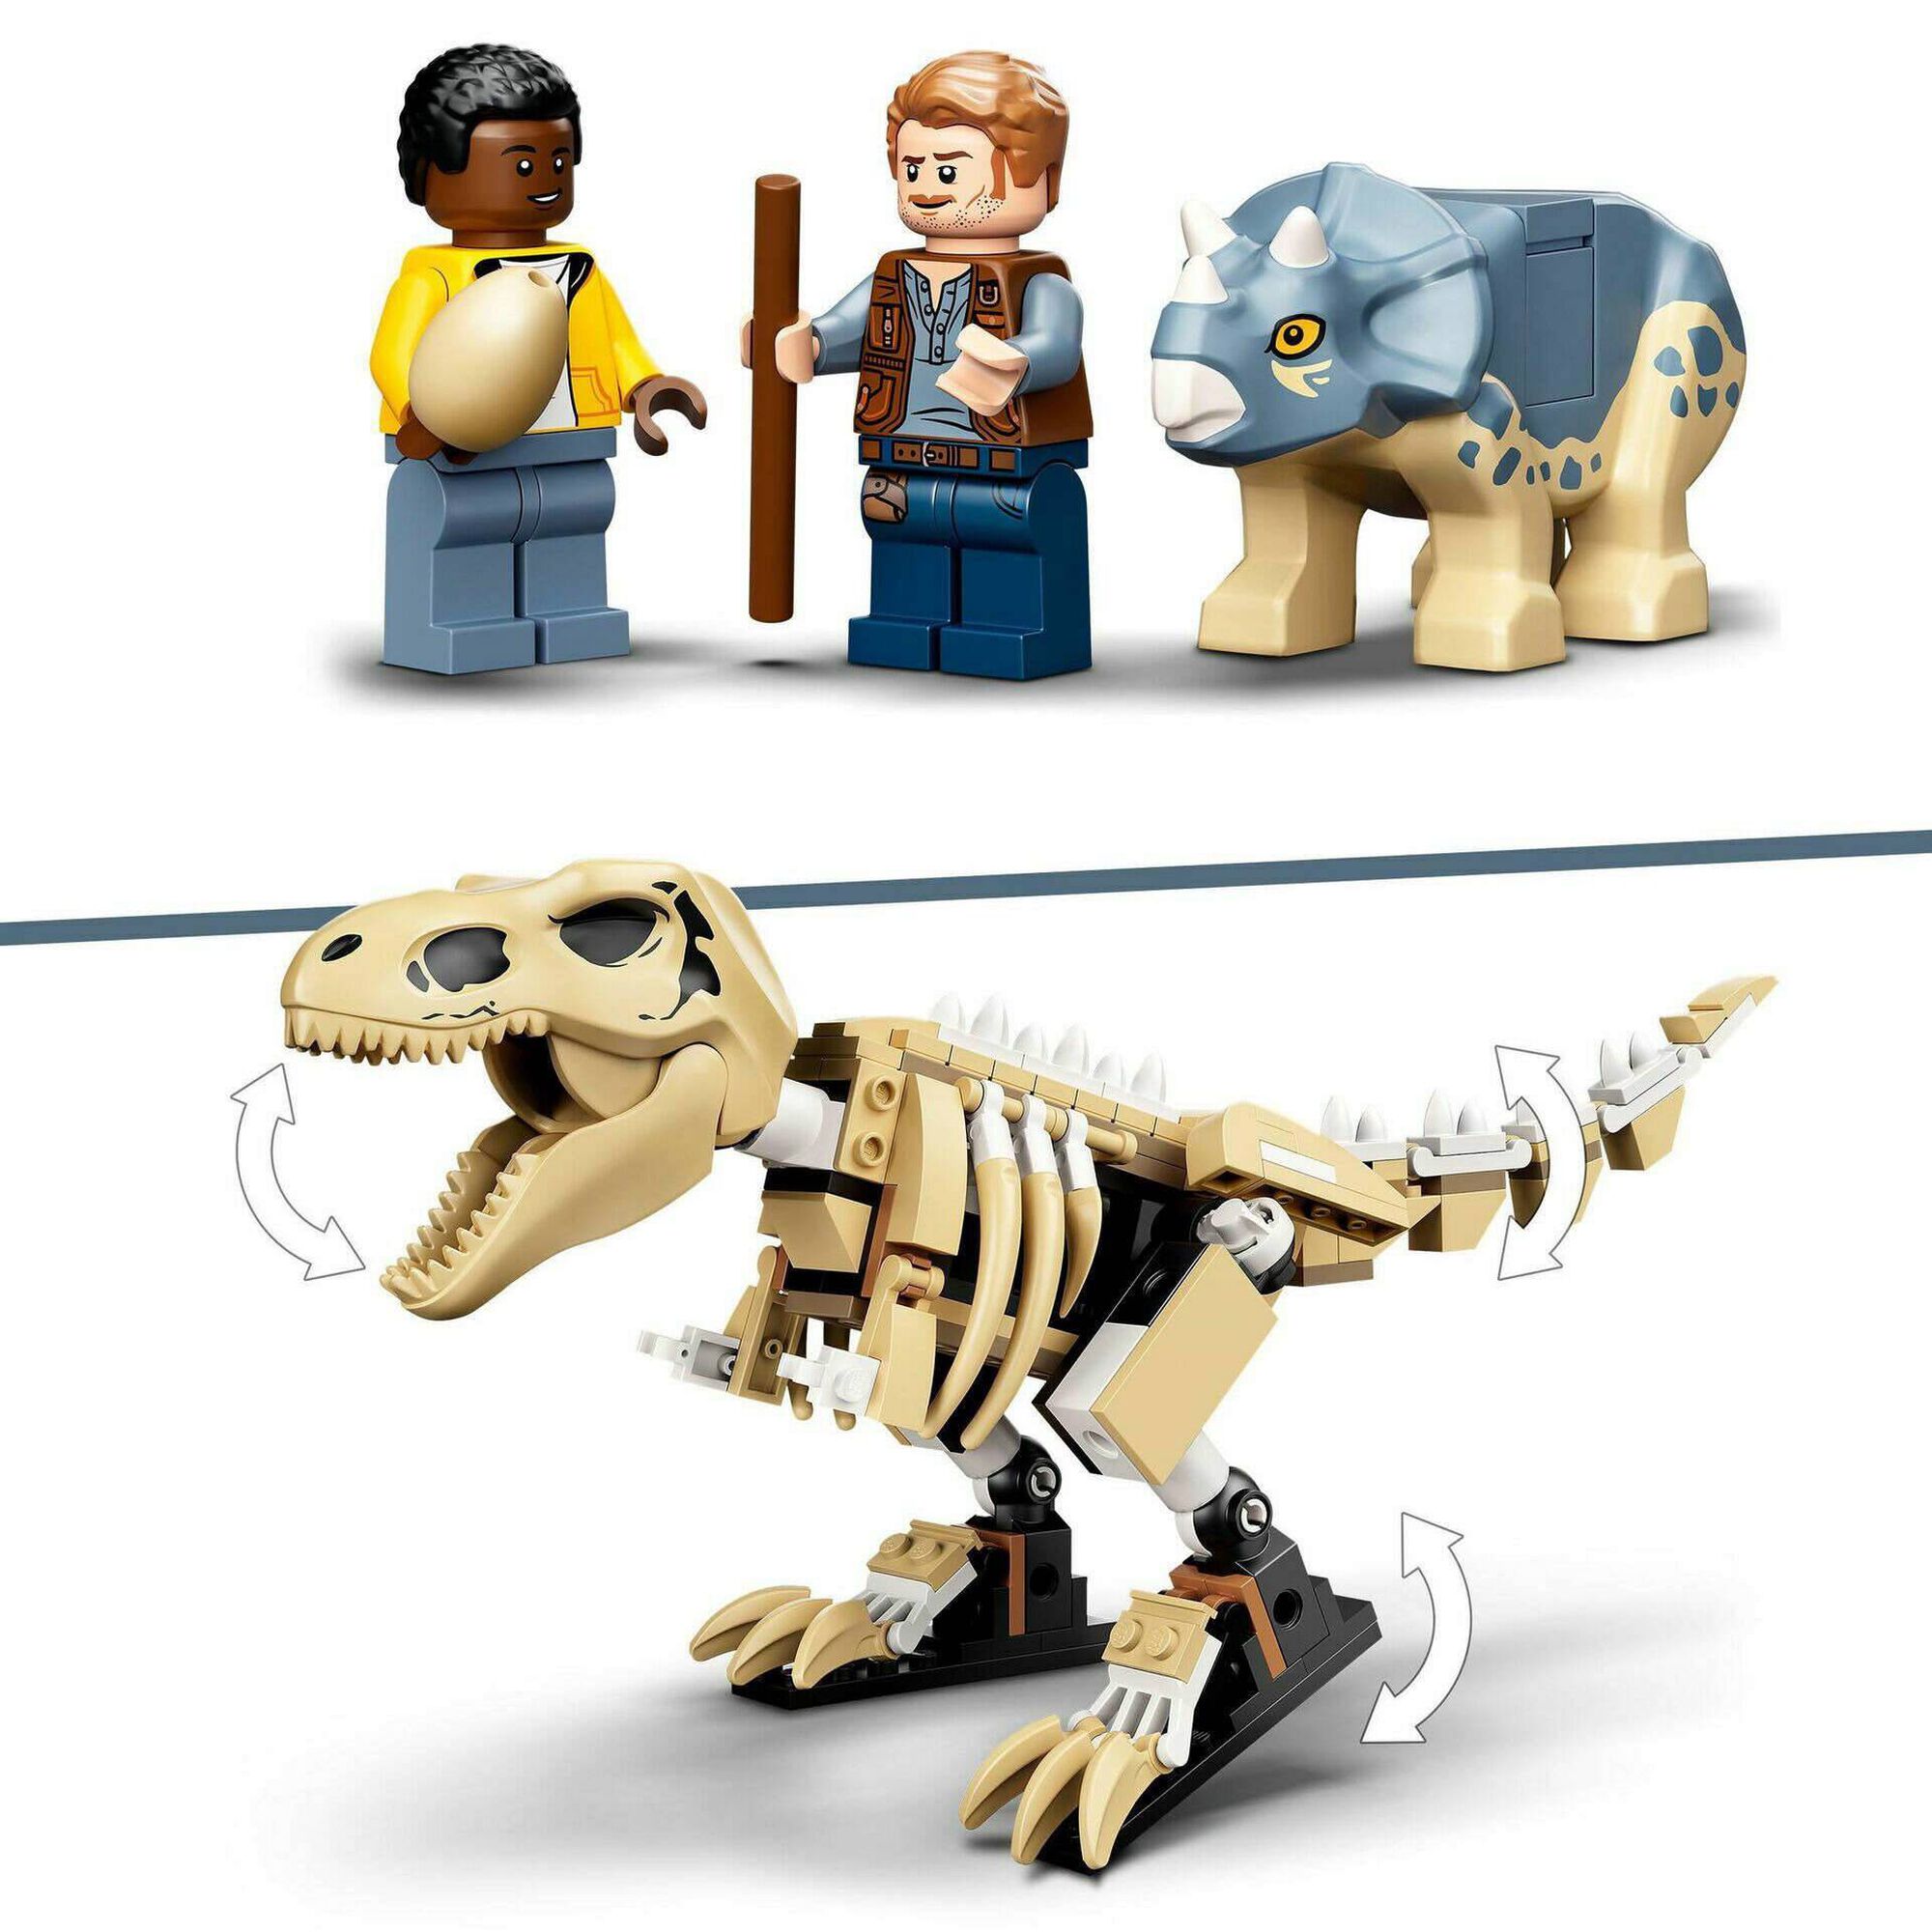 Capacho Desenho - Tiranossauro Rex Toy Story 